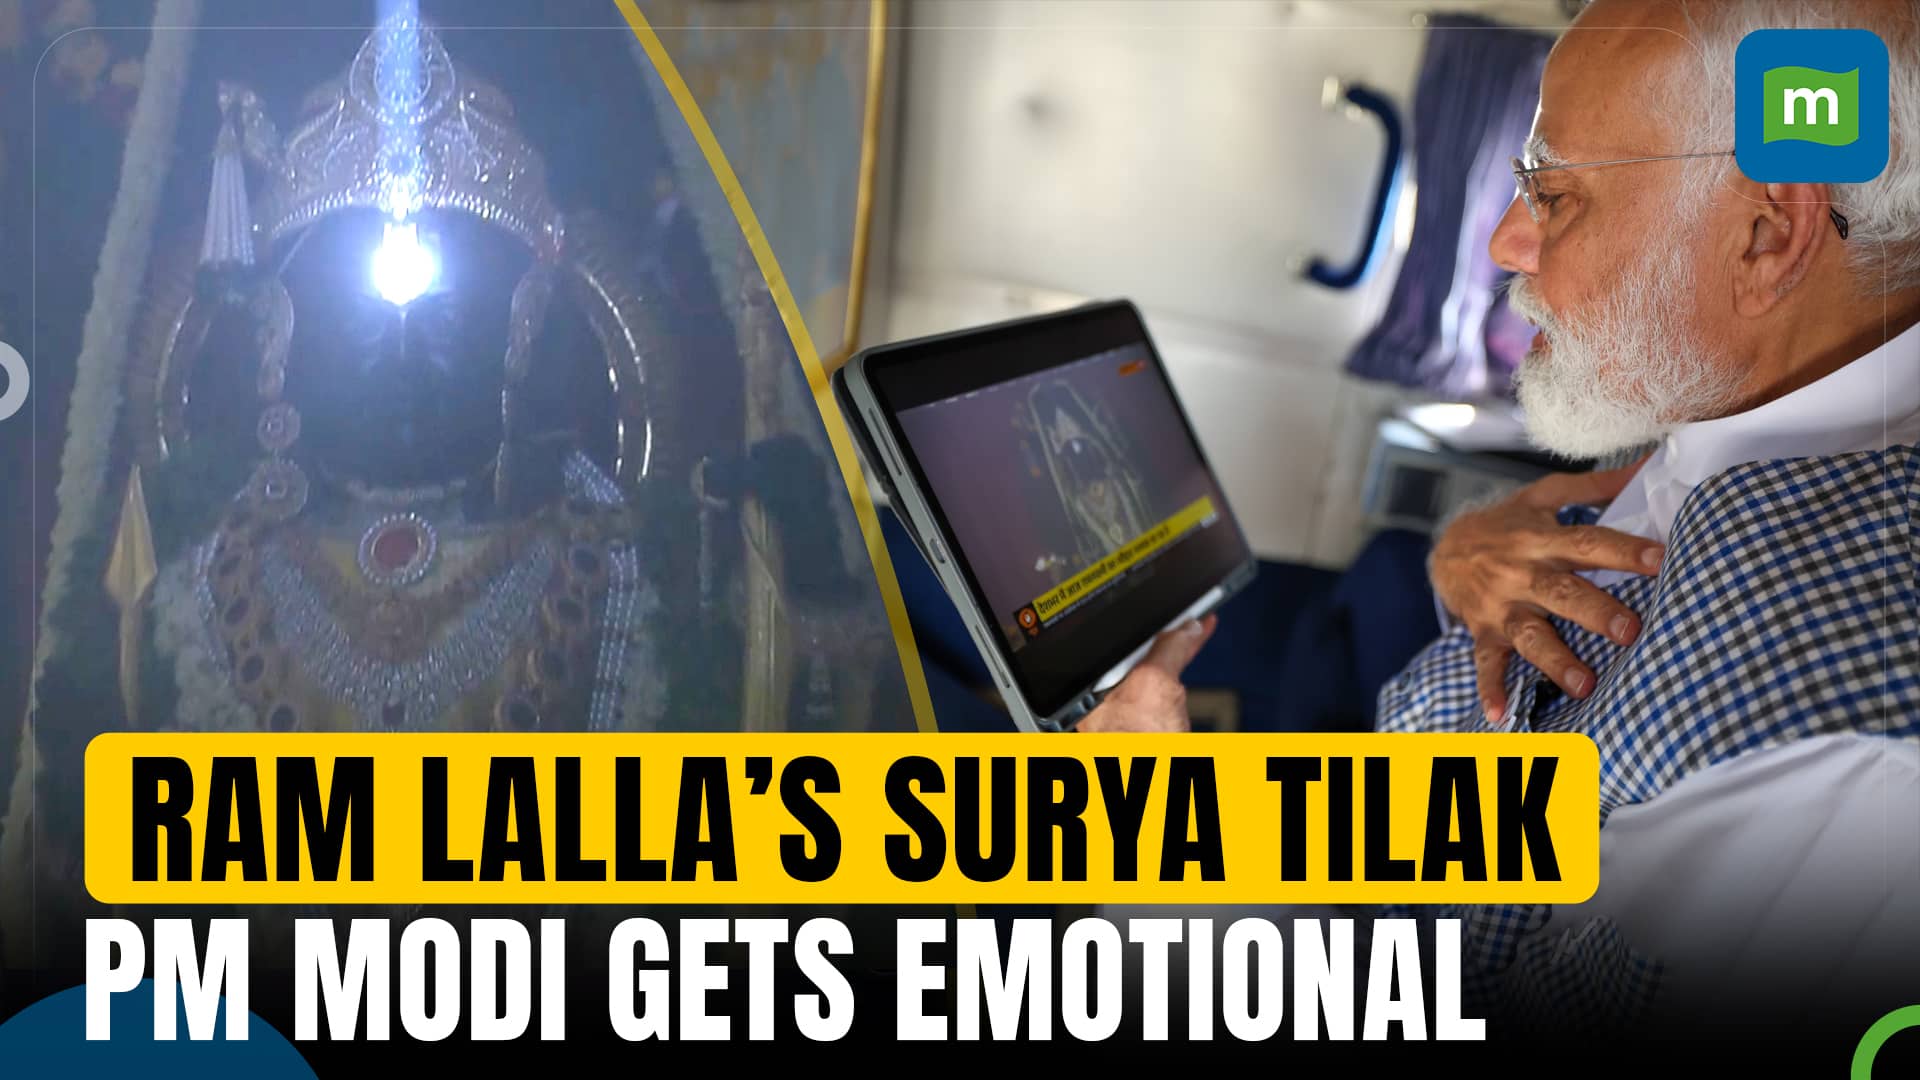 PM Modi Gets 'Emotional' As He Watches Ram Lalla’s ‘Surya Tilak’ Onboard Aircraft On Ram Navami